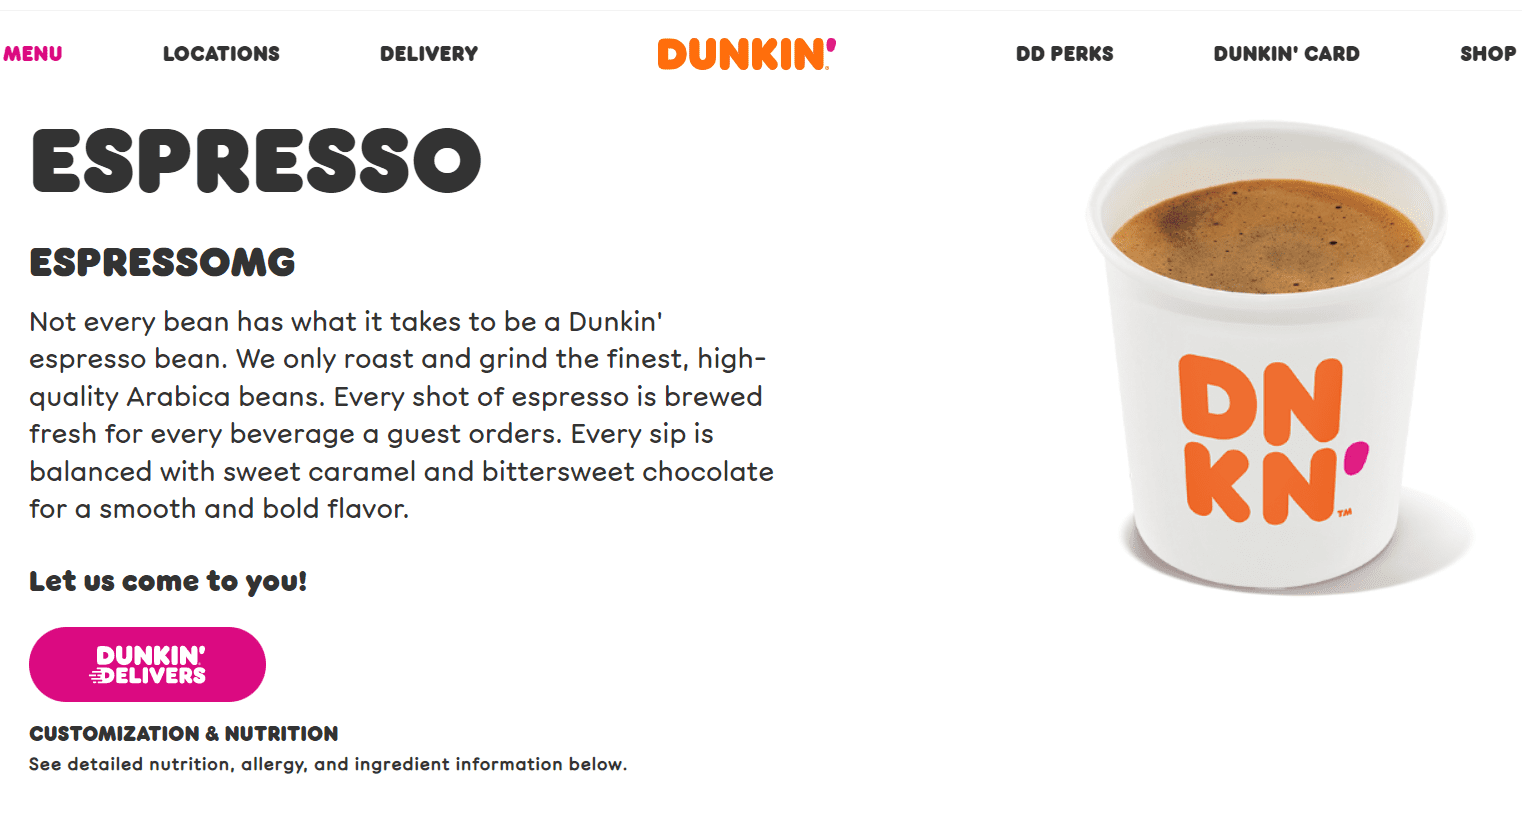 Dunkin’ Donuts Espresso